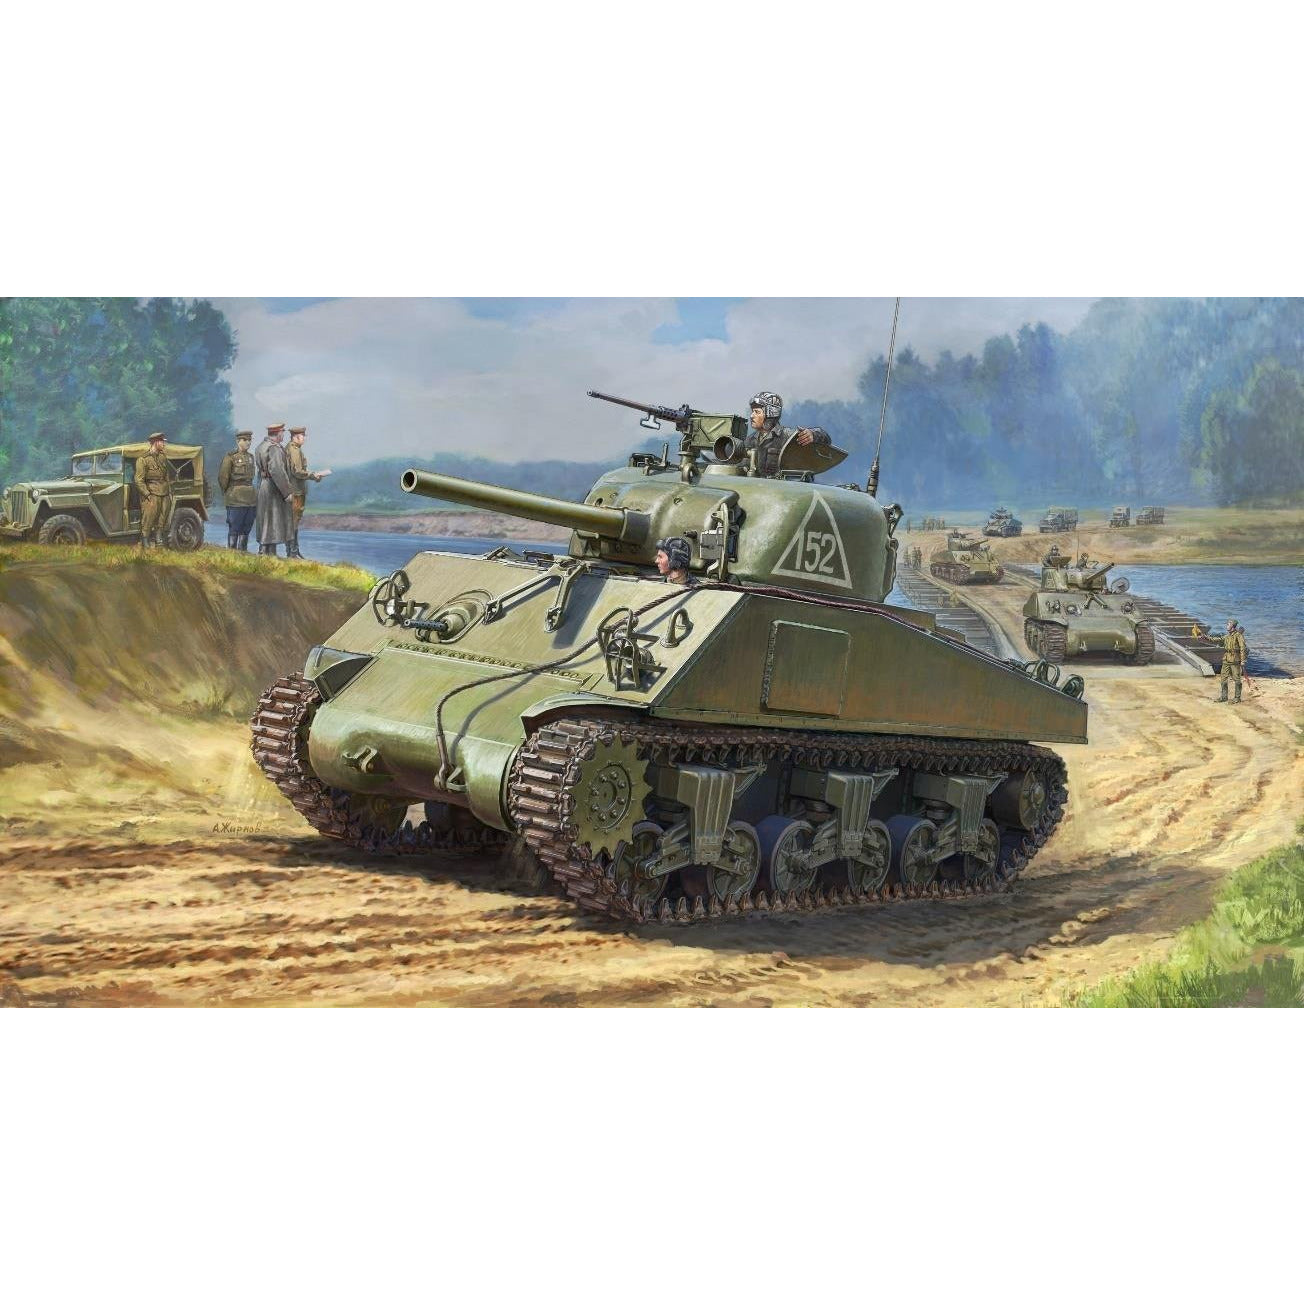 M4A2 "Sherman" 75mm Tank 1/35 #3702 by Zveda